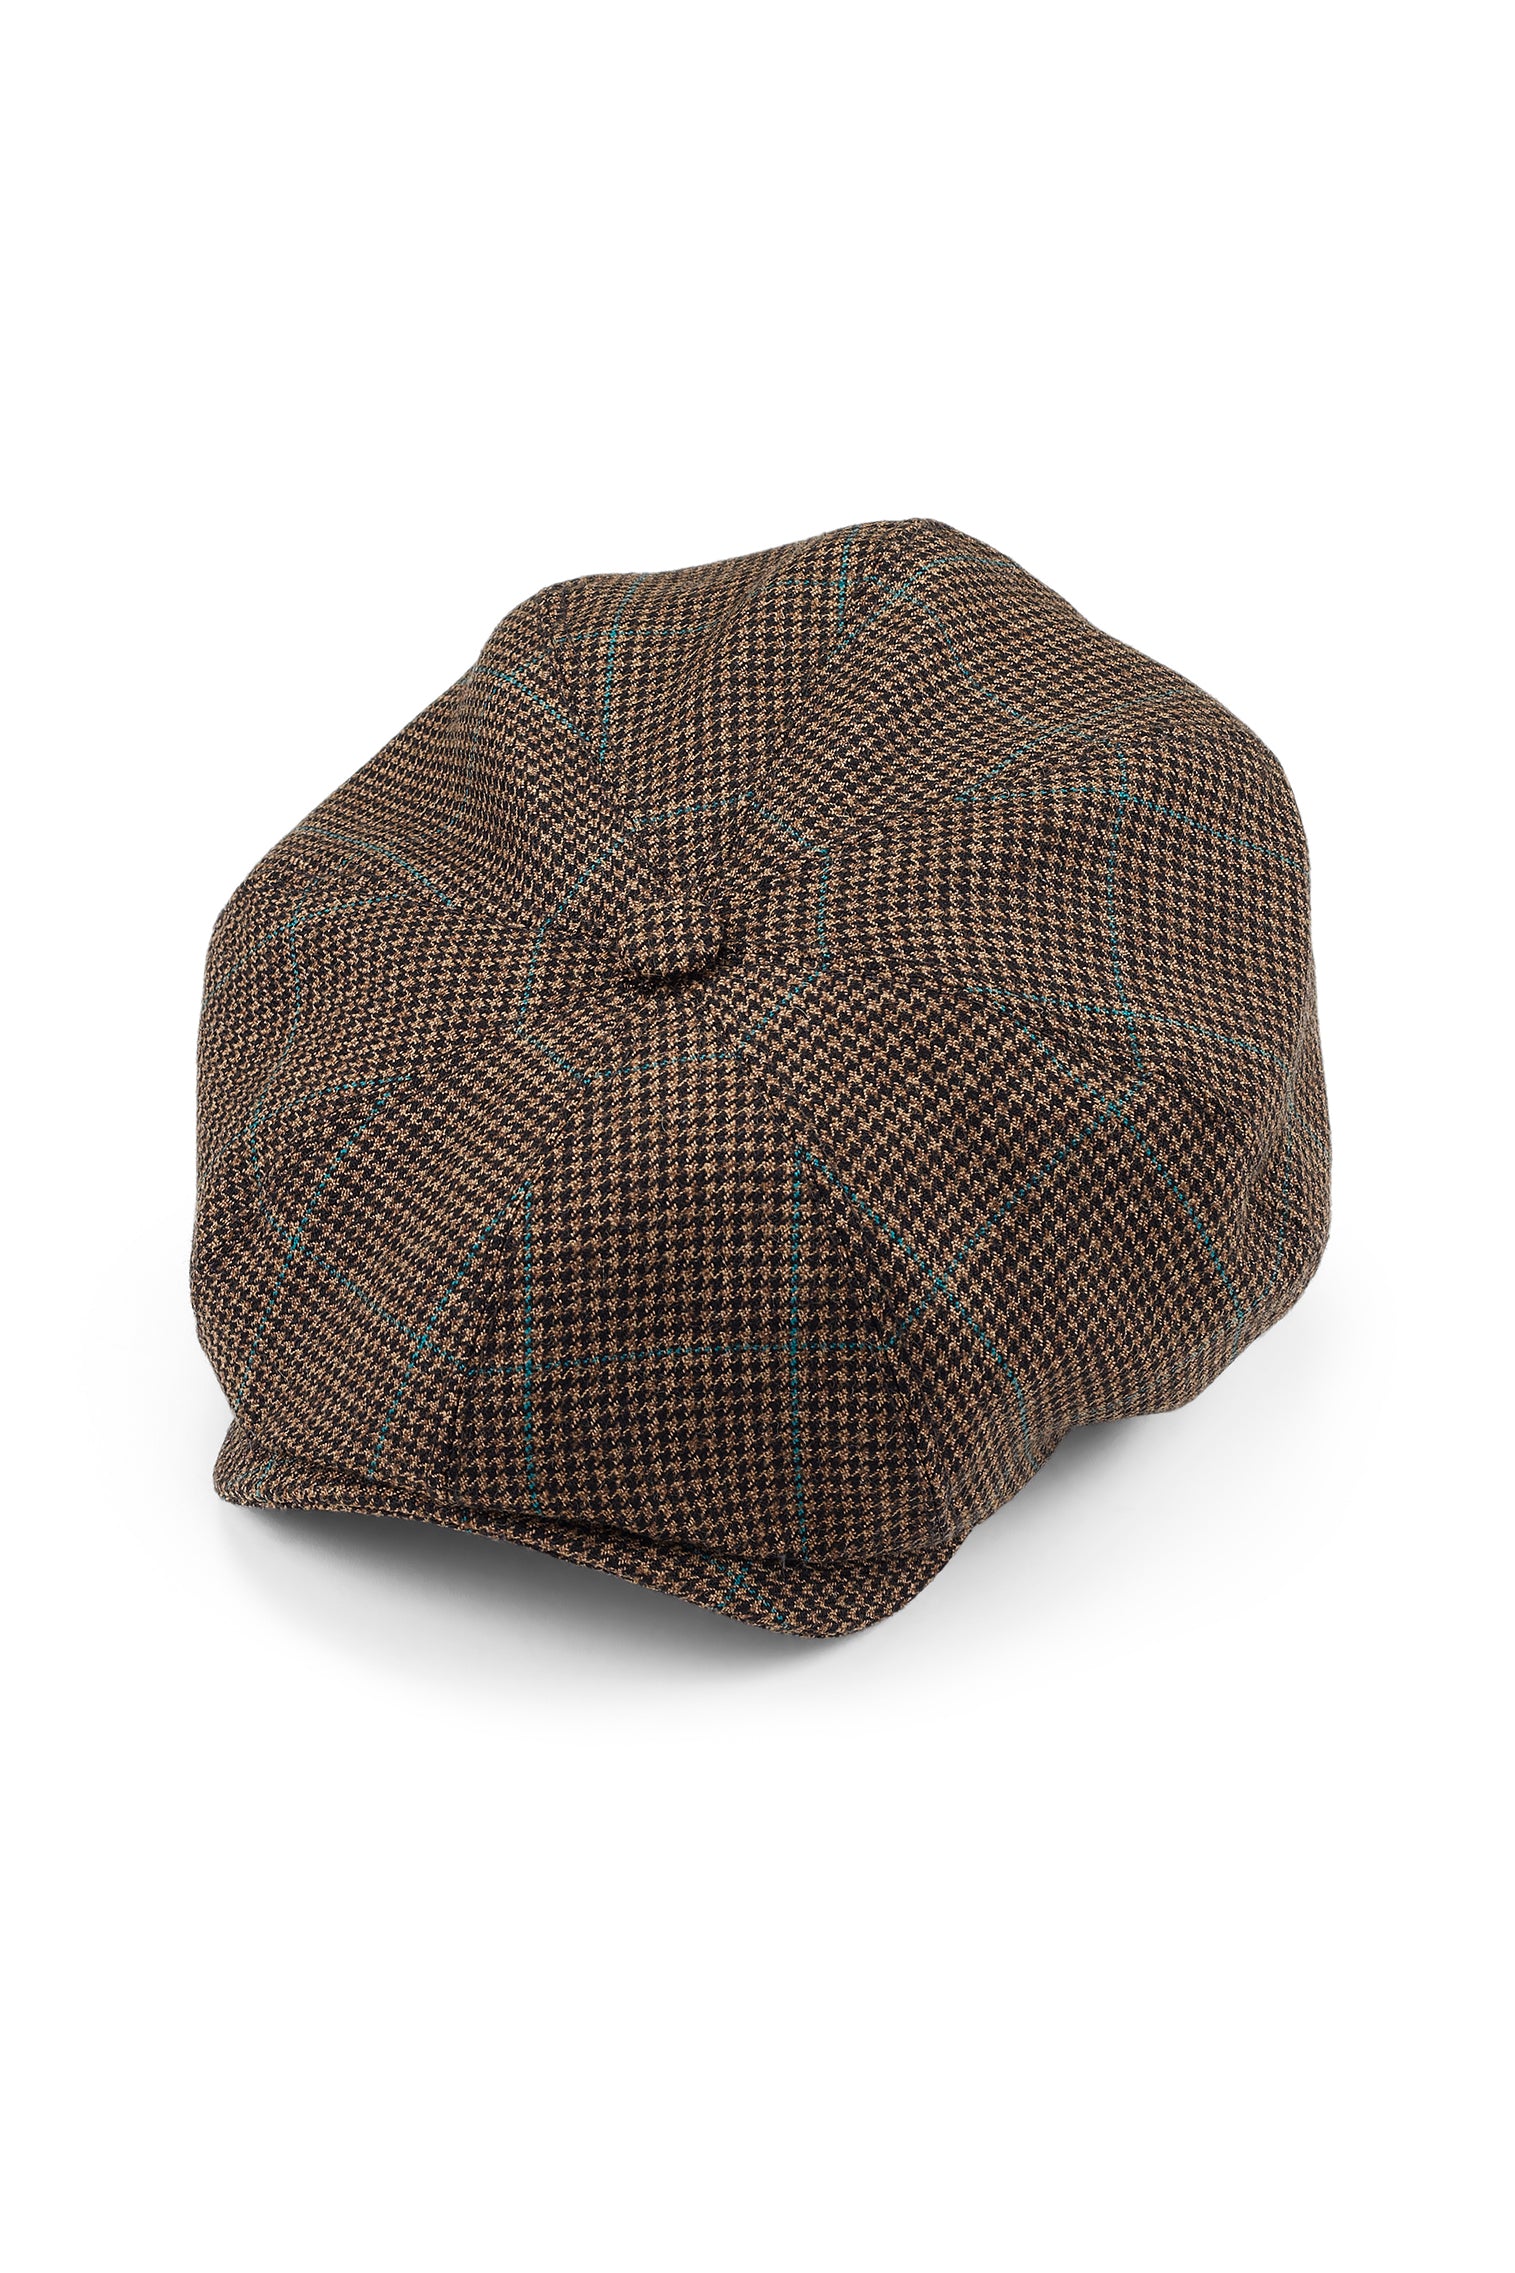 Highgrove Brown Bakerboy Cap - Hats for Cheltenham Races - Lock & Co. Hatters London UK